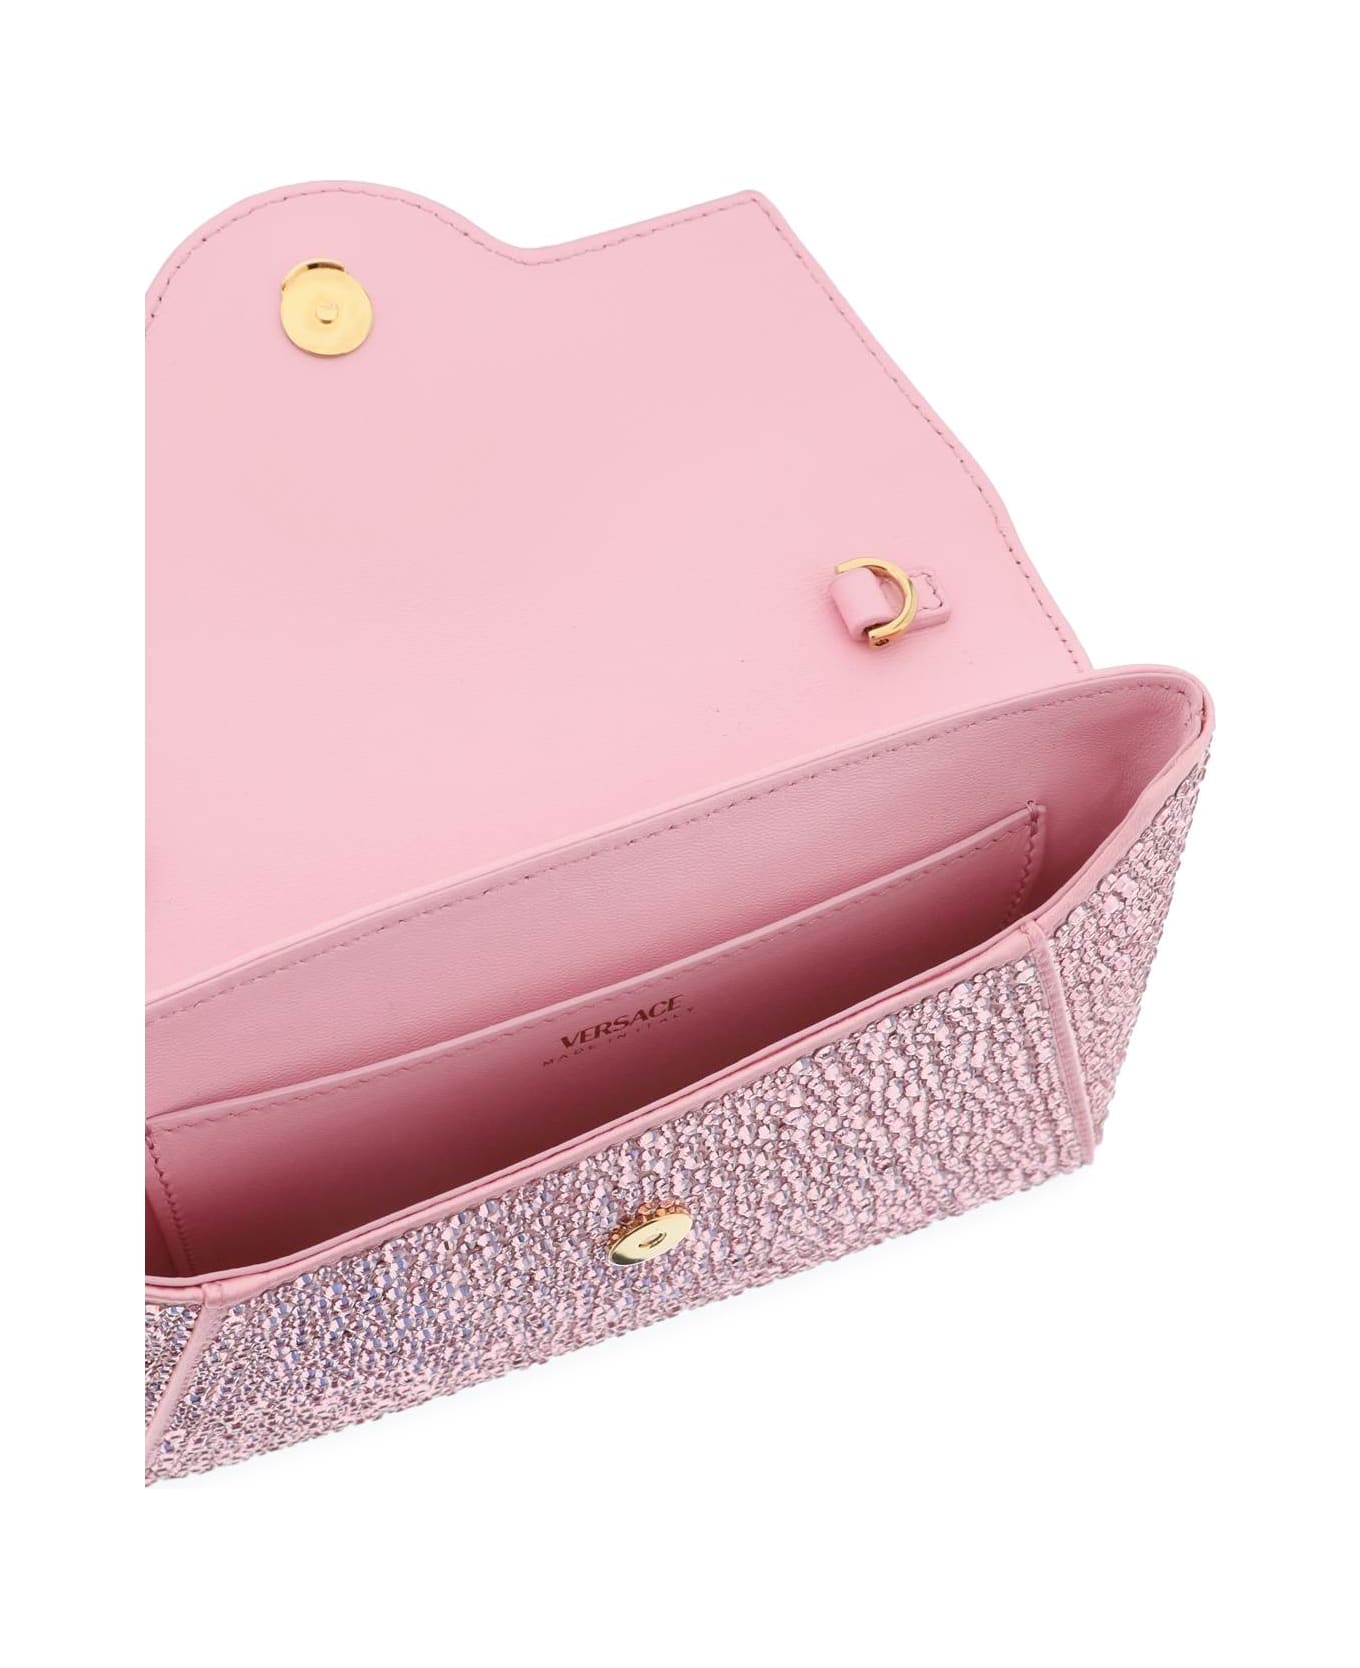 Versace La Medusa Envelope Clutch With Crystals - PALE PINK VERSACE GOLD (Pink)